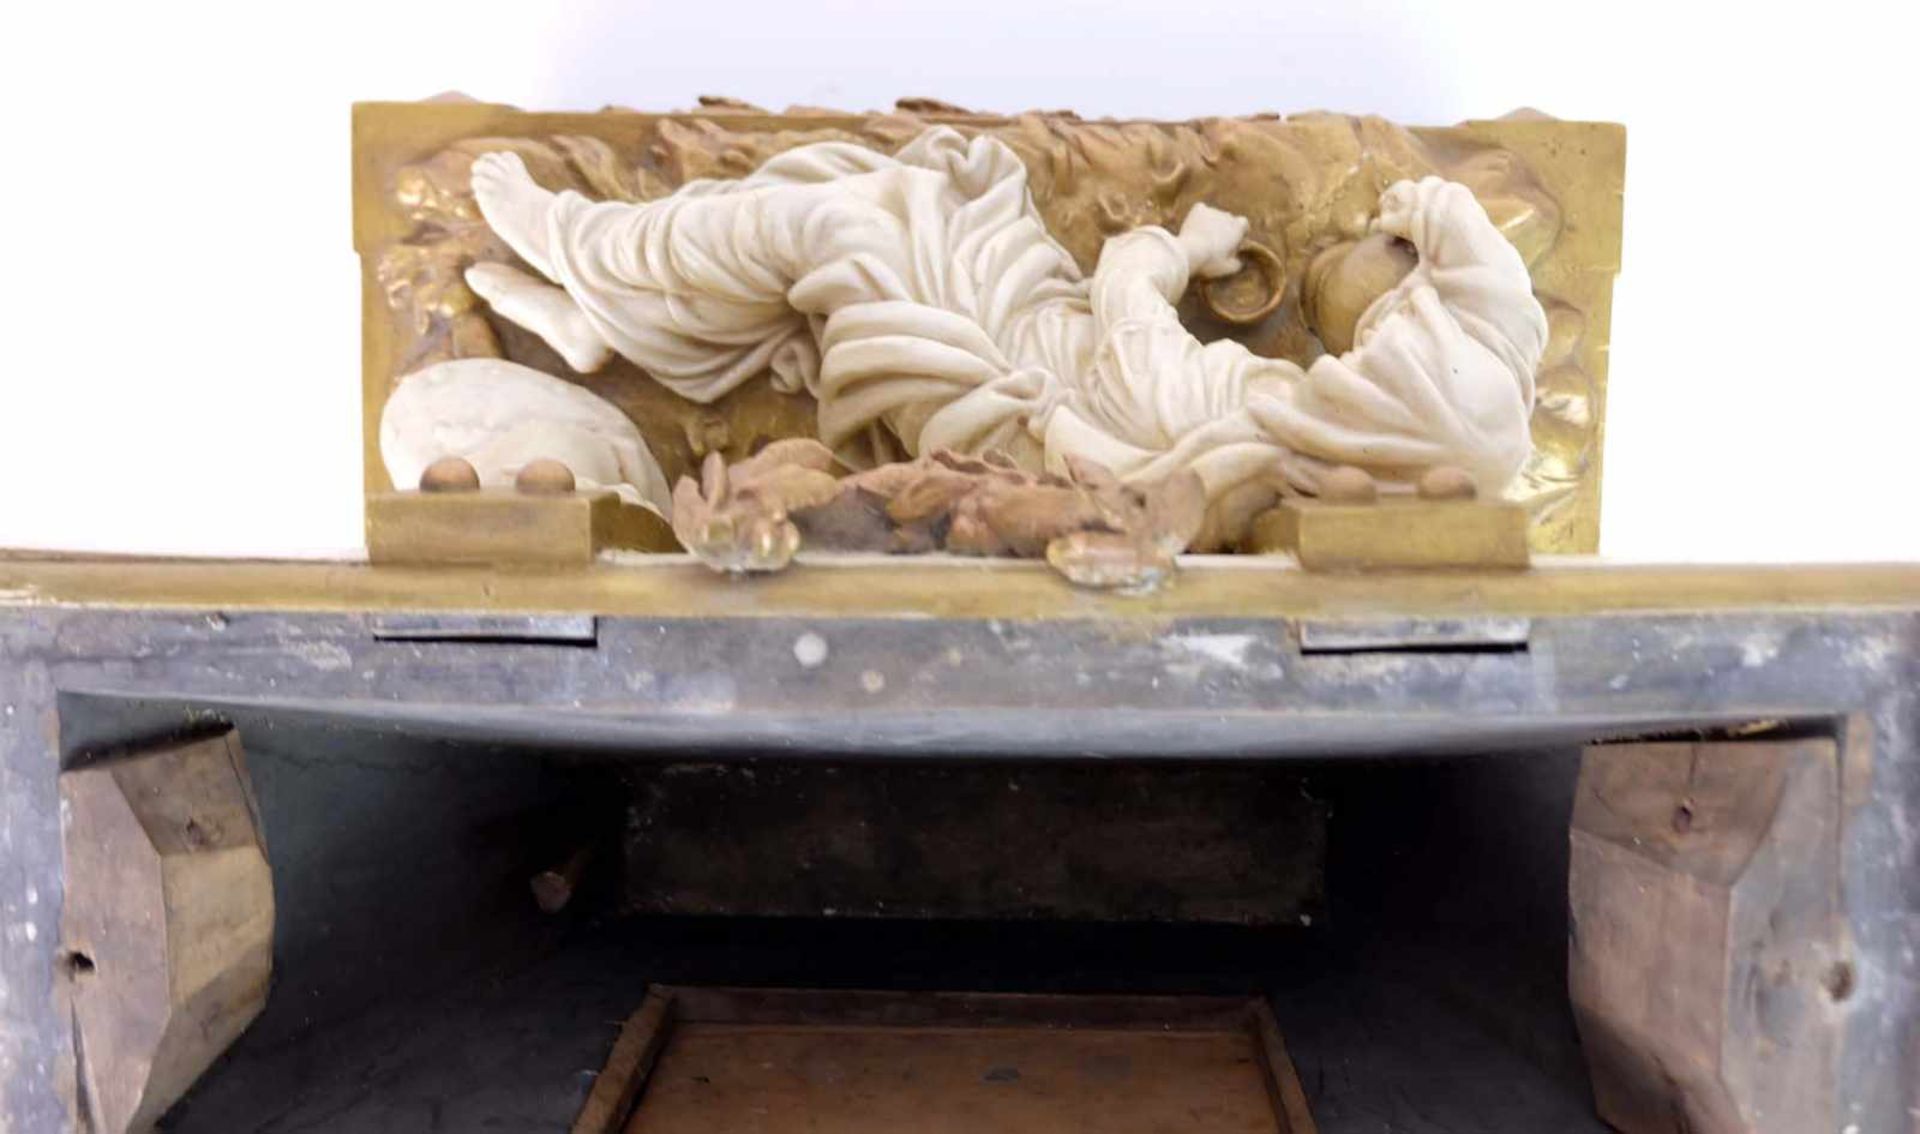 FIGURENUHR, Klassizismus, Napoleon I-Epoche, Holz/ Stuck, 3tlg Skulpturenaufbau, rechteckige Plinthe - Bild 4 aus 9